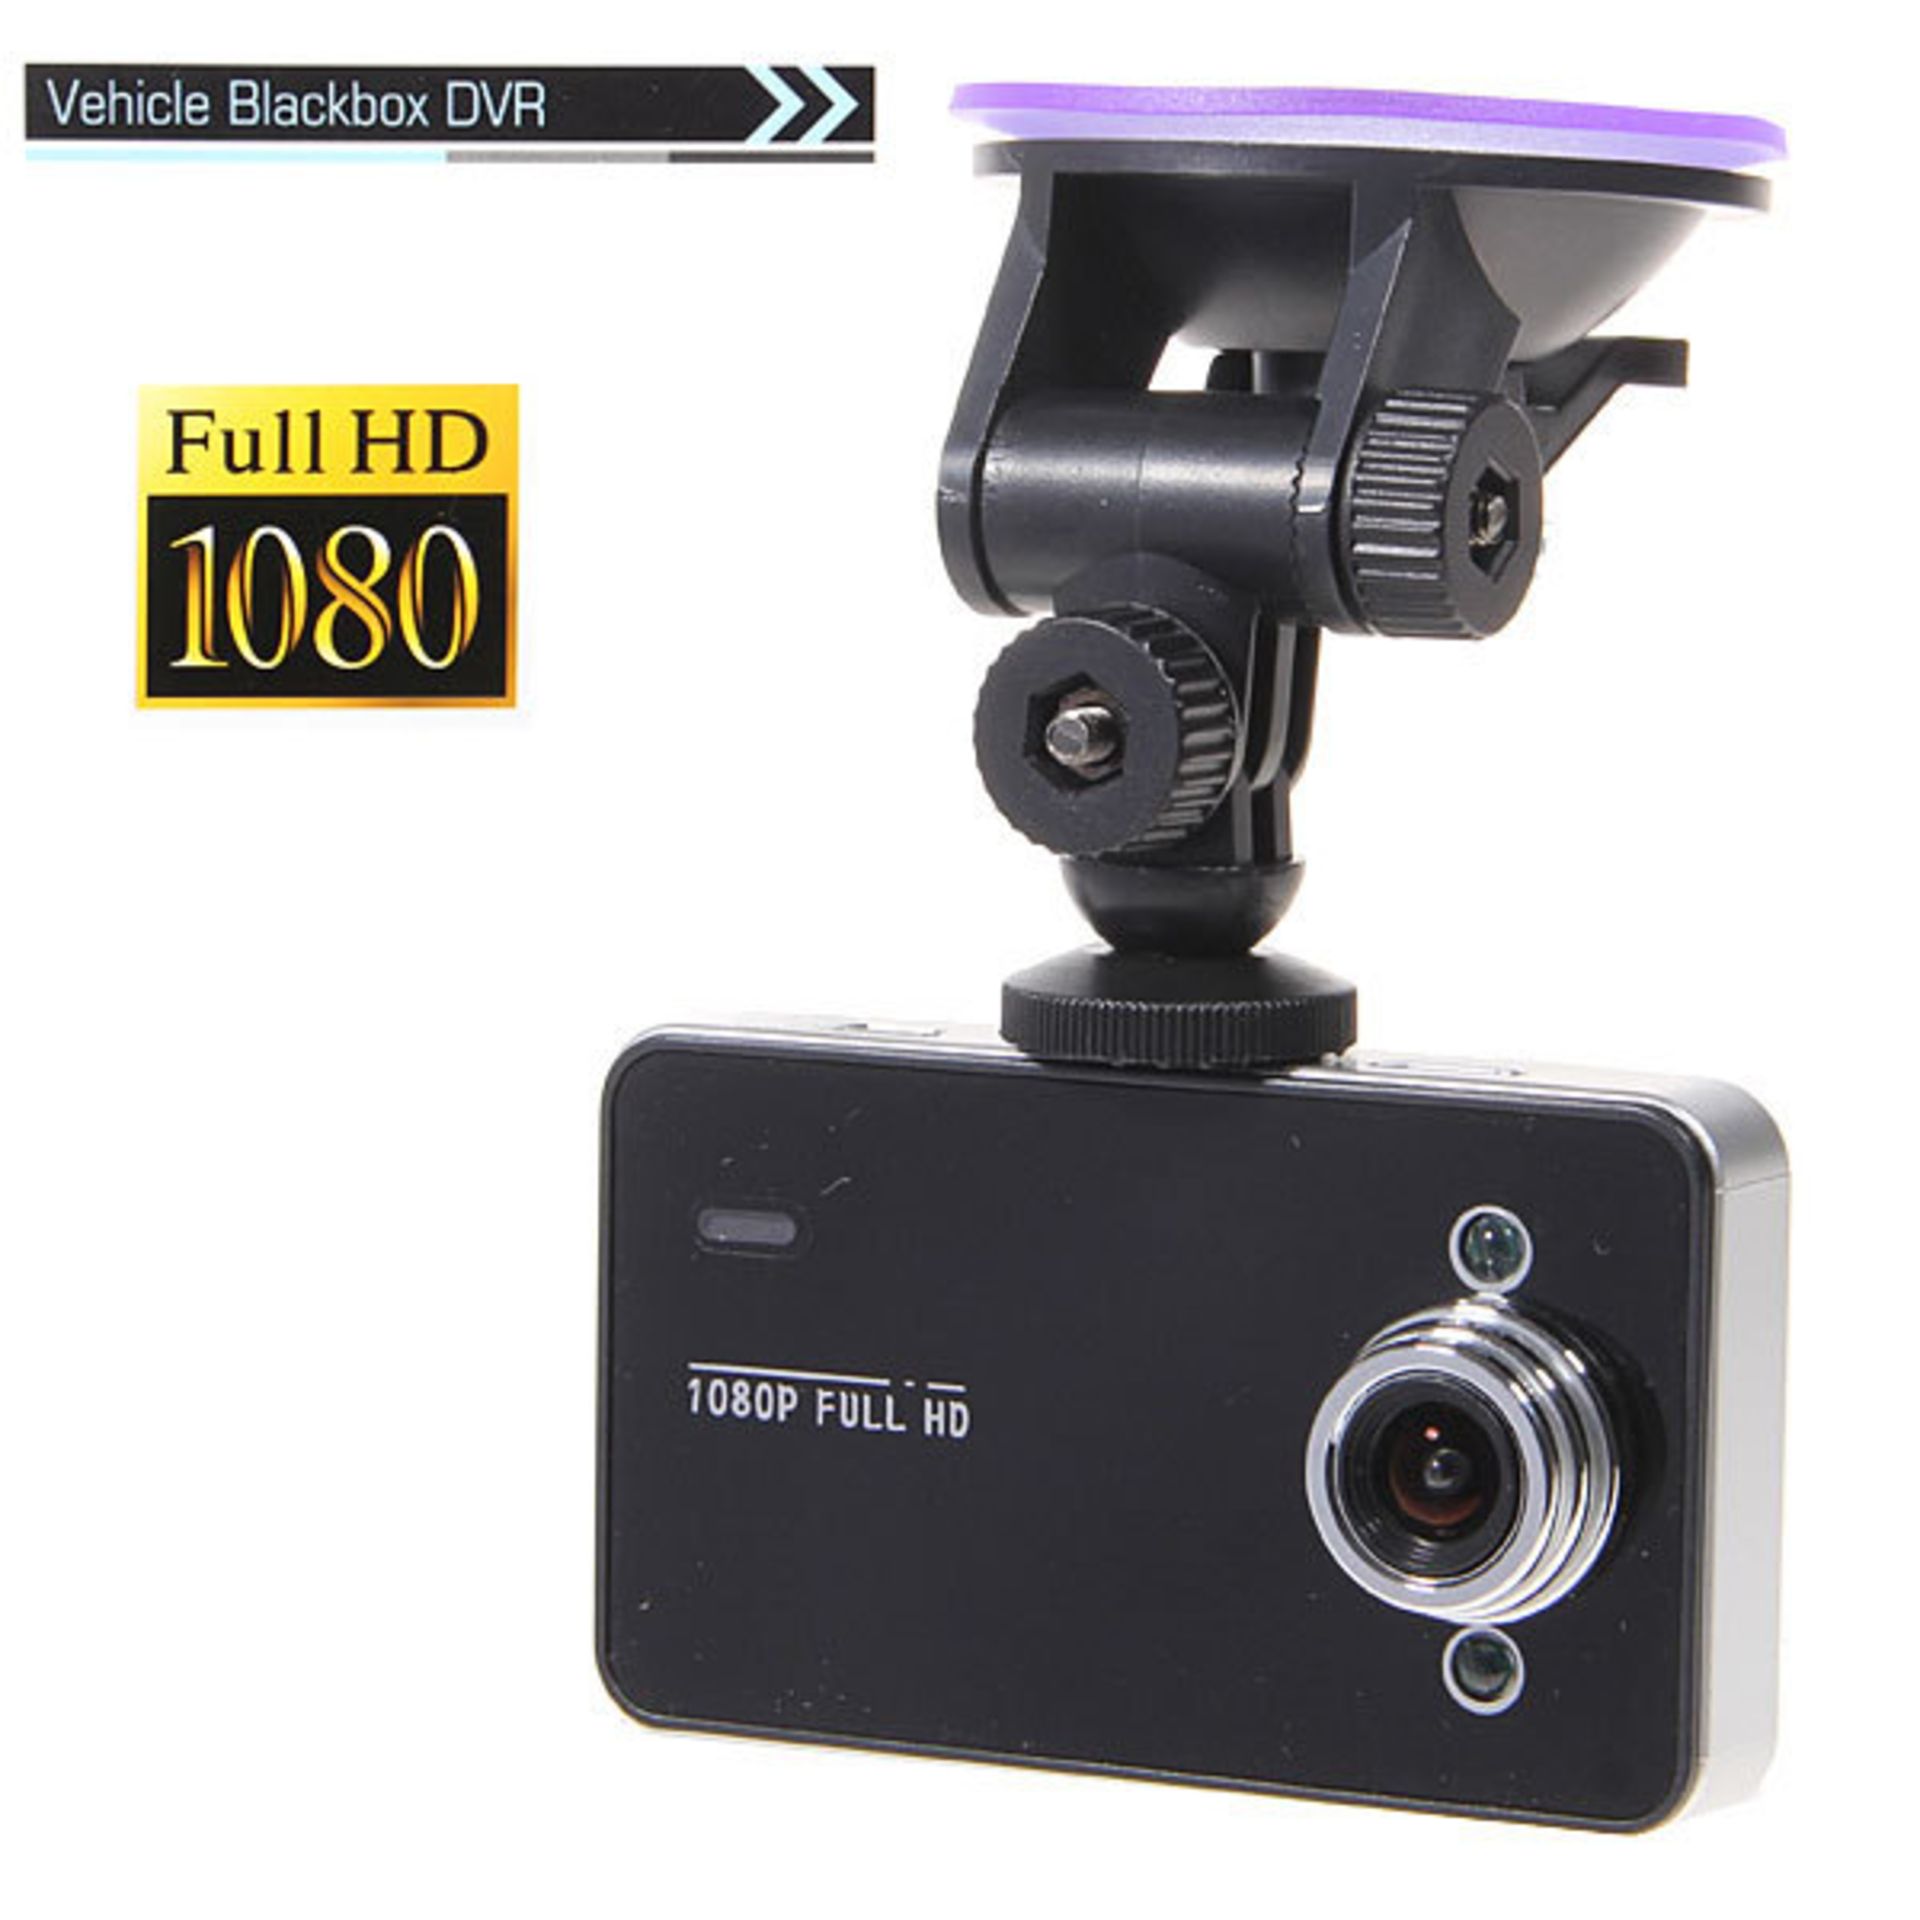 V Brand New Car Camera Blackbox DVR With Motion Detecting HD/DVR 1080p X 2 YOUR BID PRICE TO BE